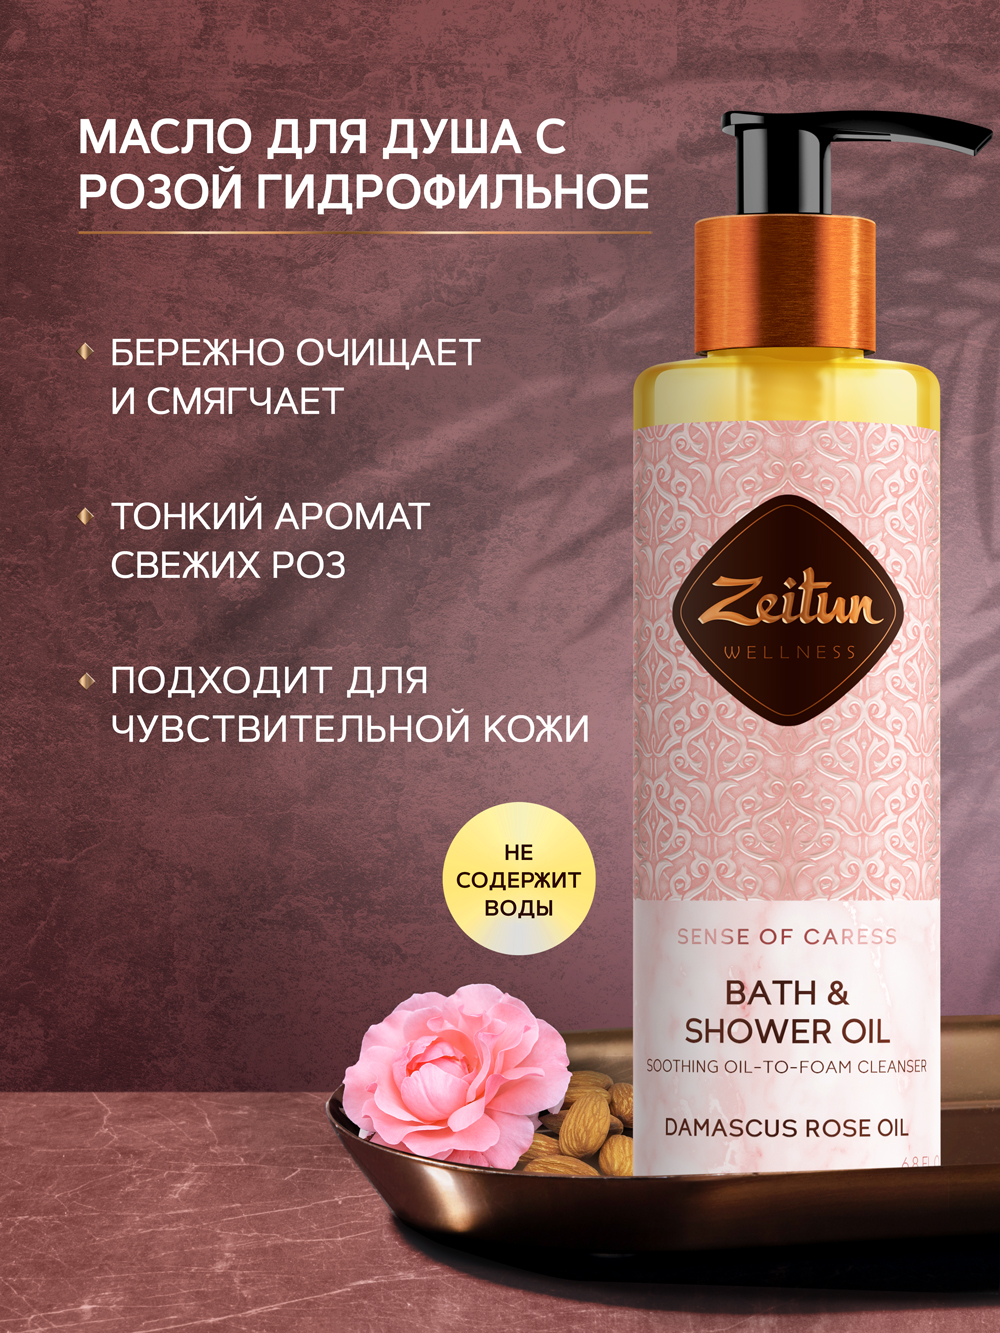 Масло для душа Zeitun Ritual of Caress Bath & Shower Oil смягчающее, 200 мл